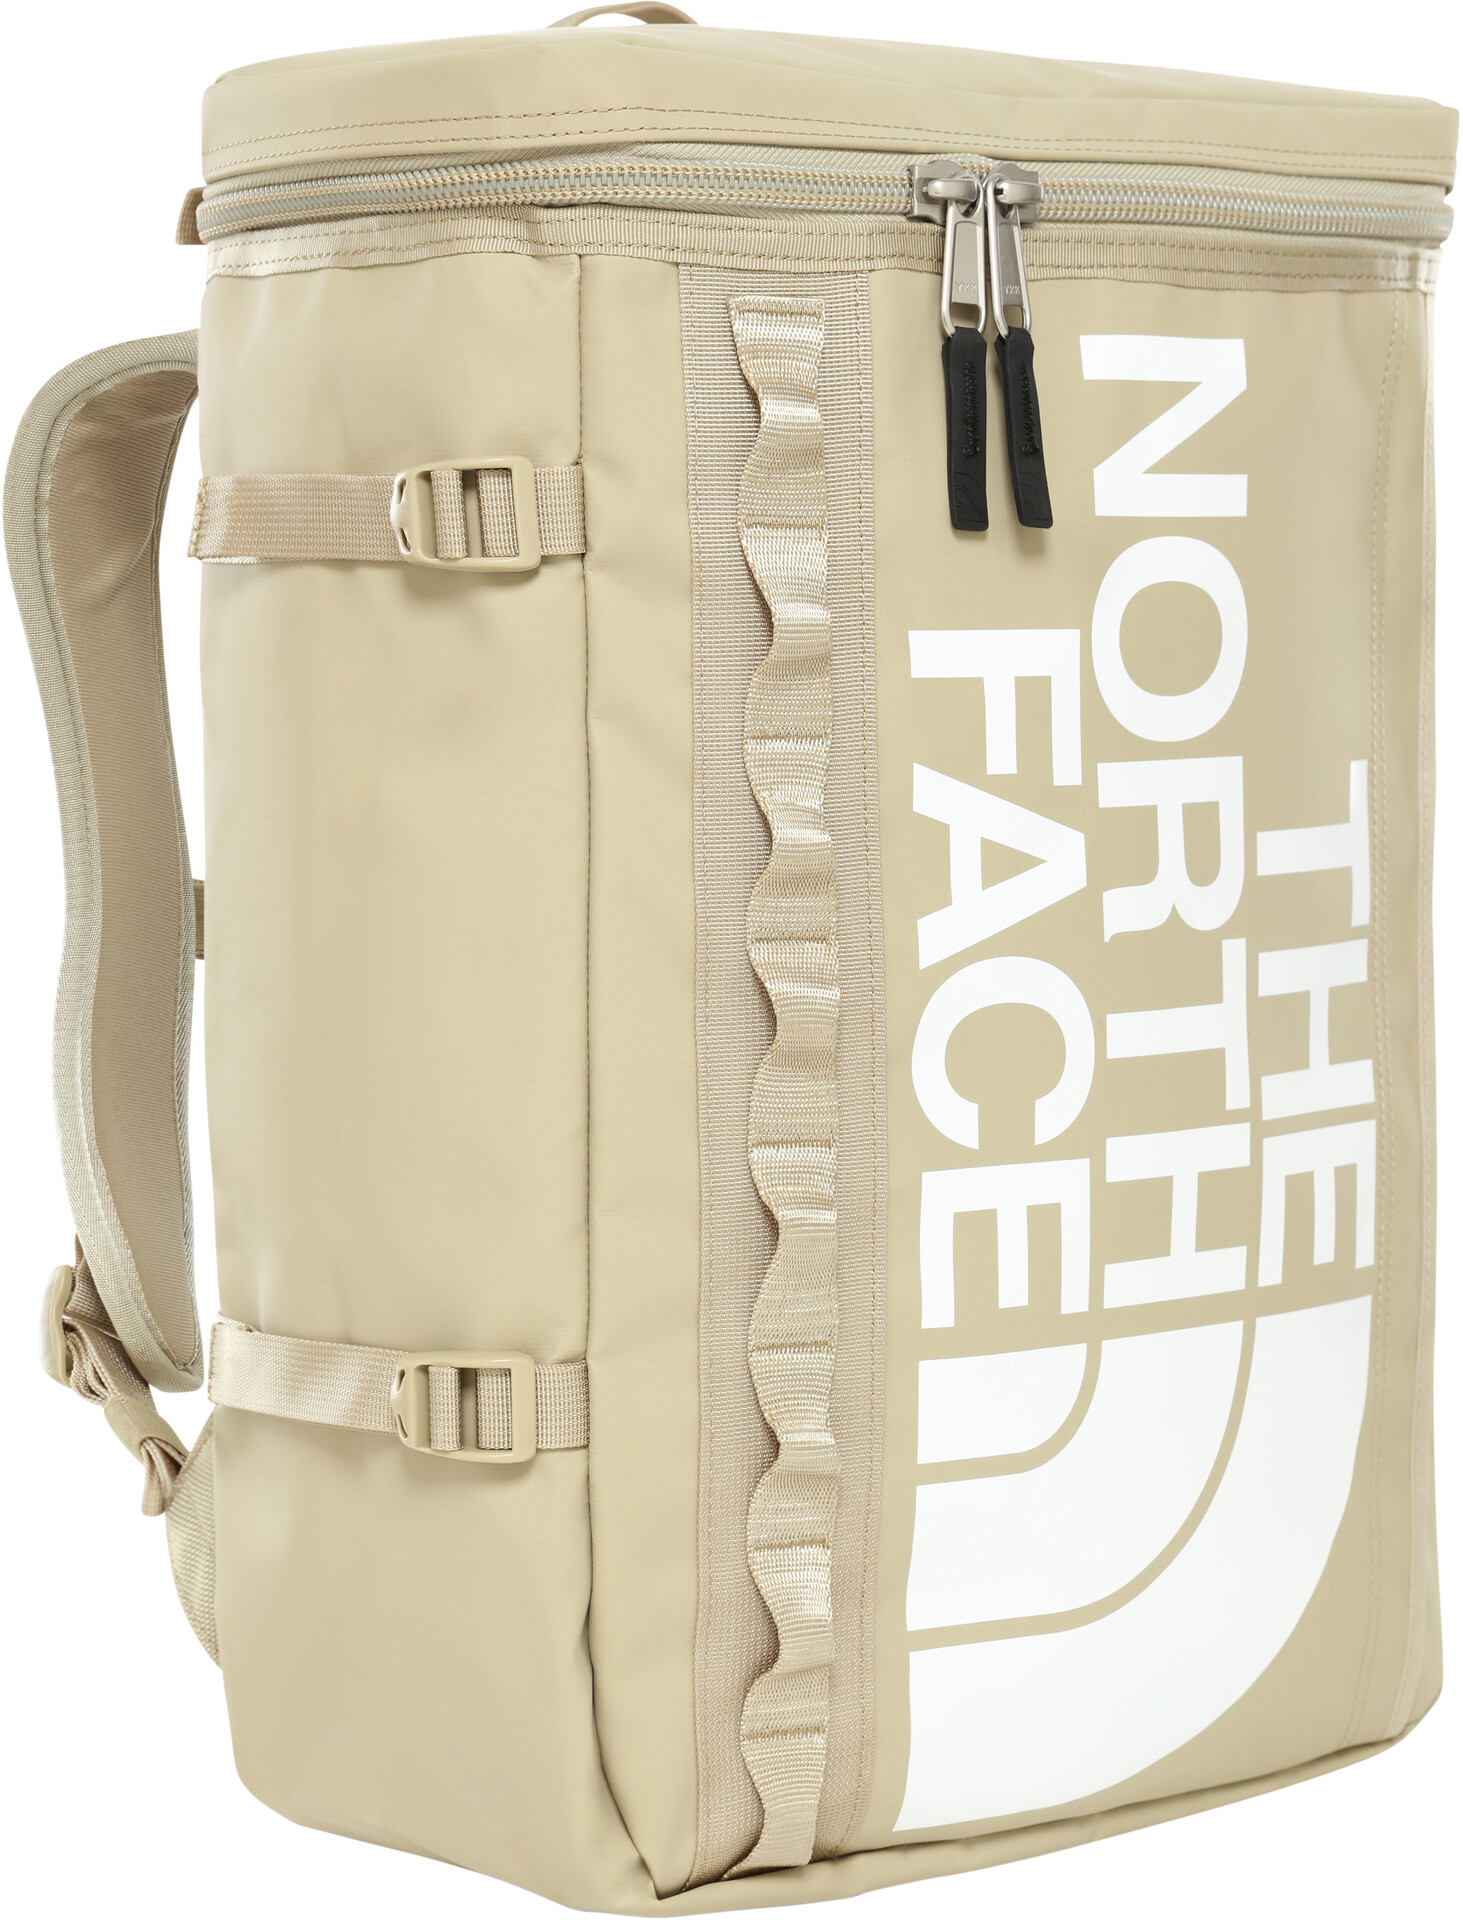 north face beige backpack